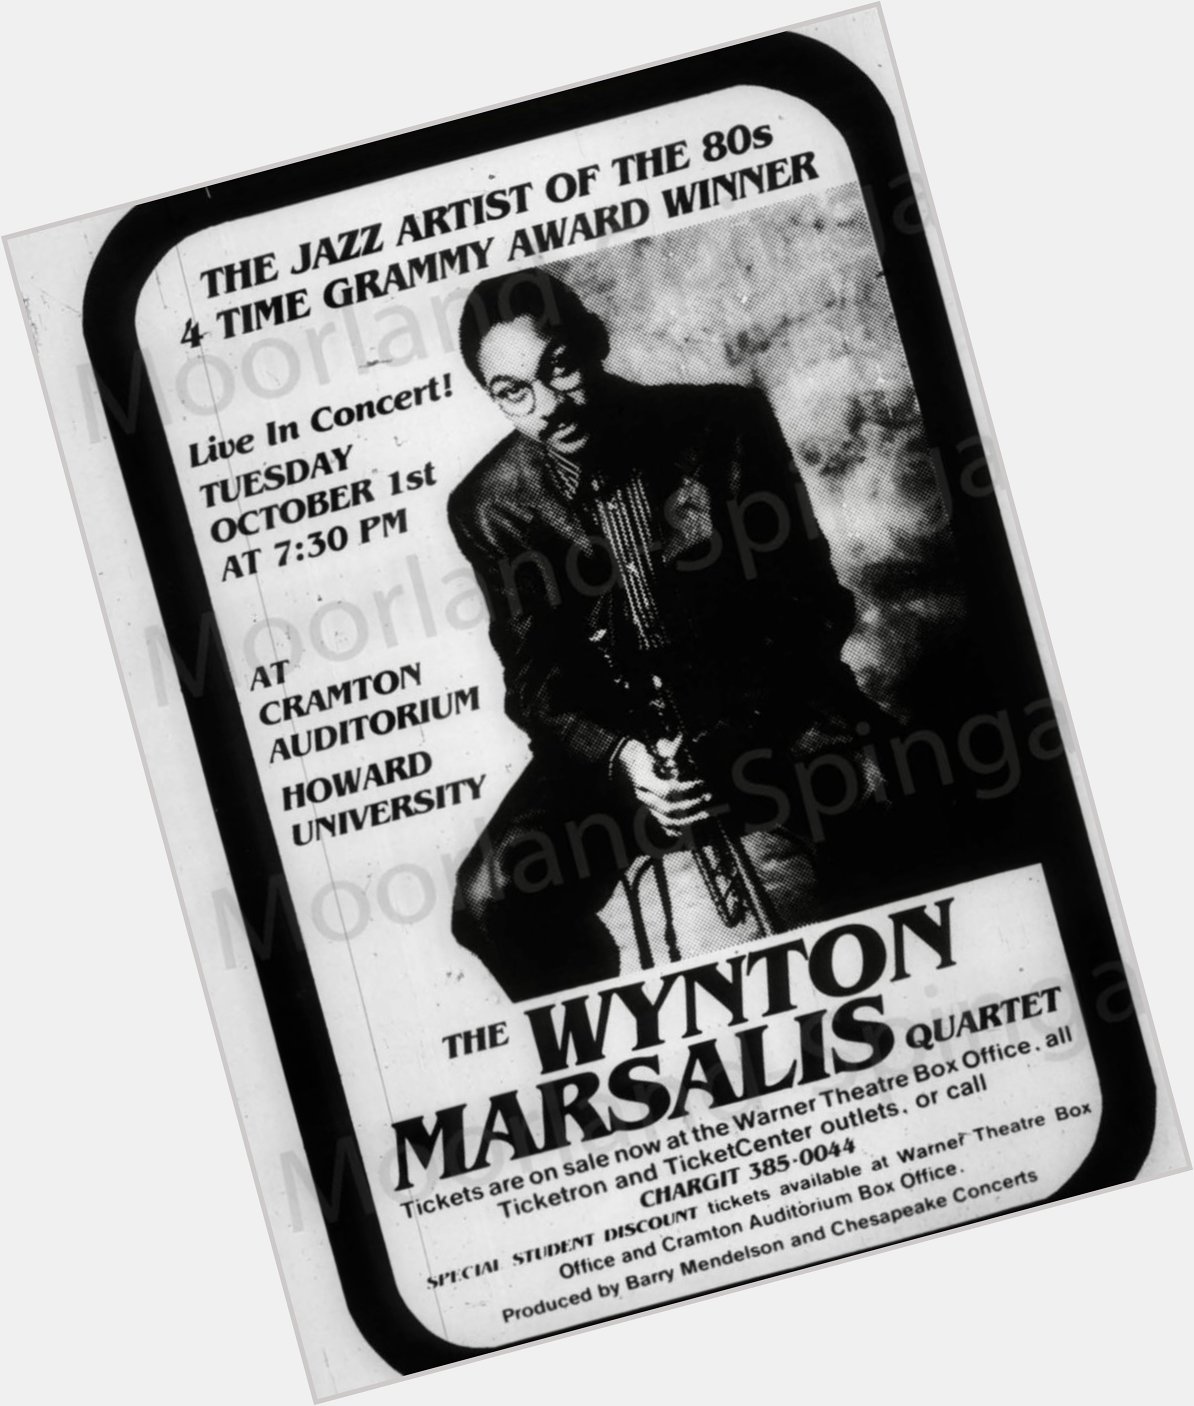 Happy 60th Birthday, Wynton Marsalis. 